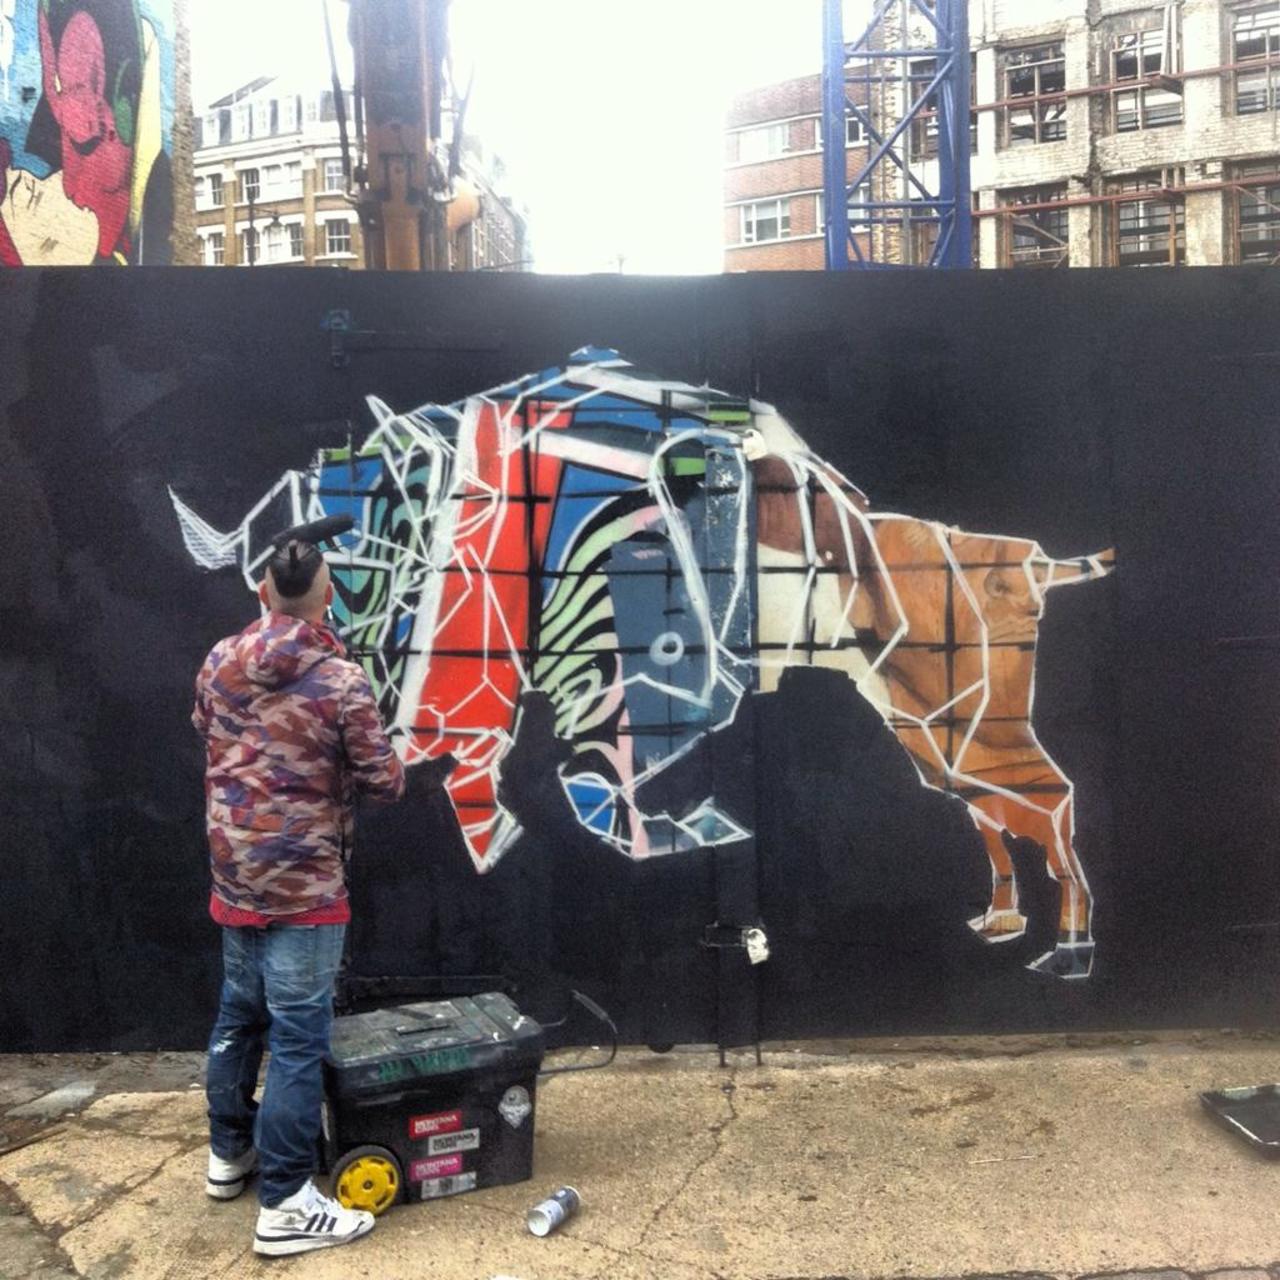 RT @BrickLaneArt: WIP from @AirborneMark on Leonard Street #art #graffiti #streetart http://t.co/tc7074M4Gc